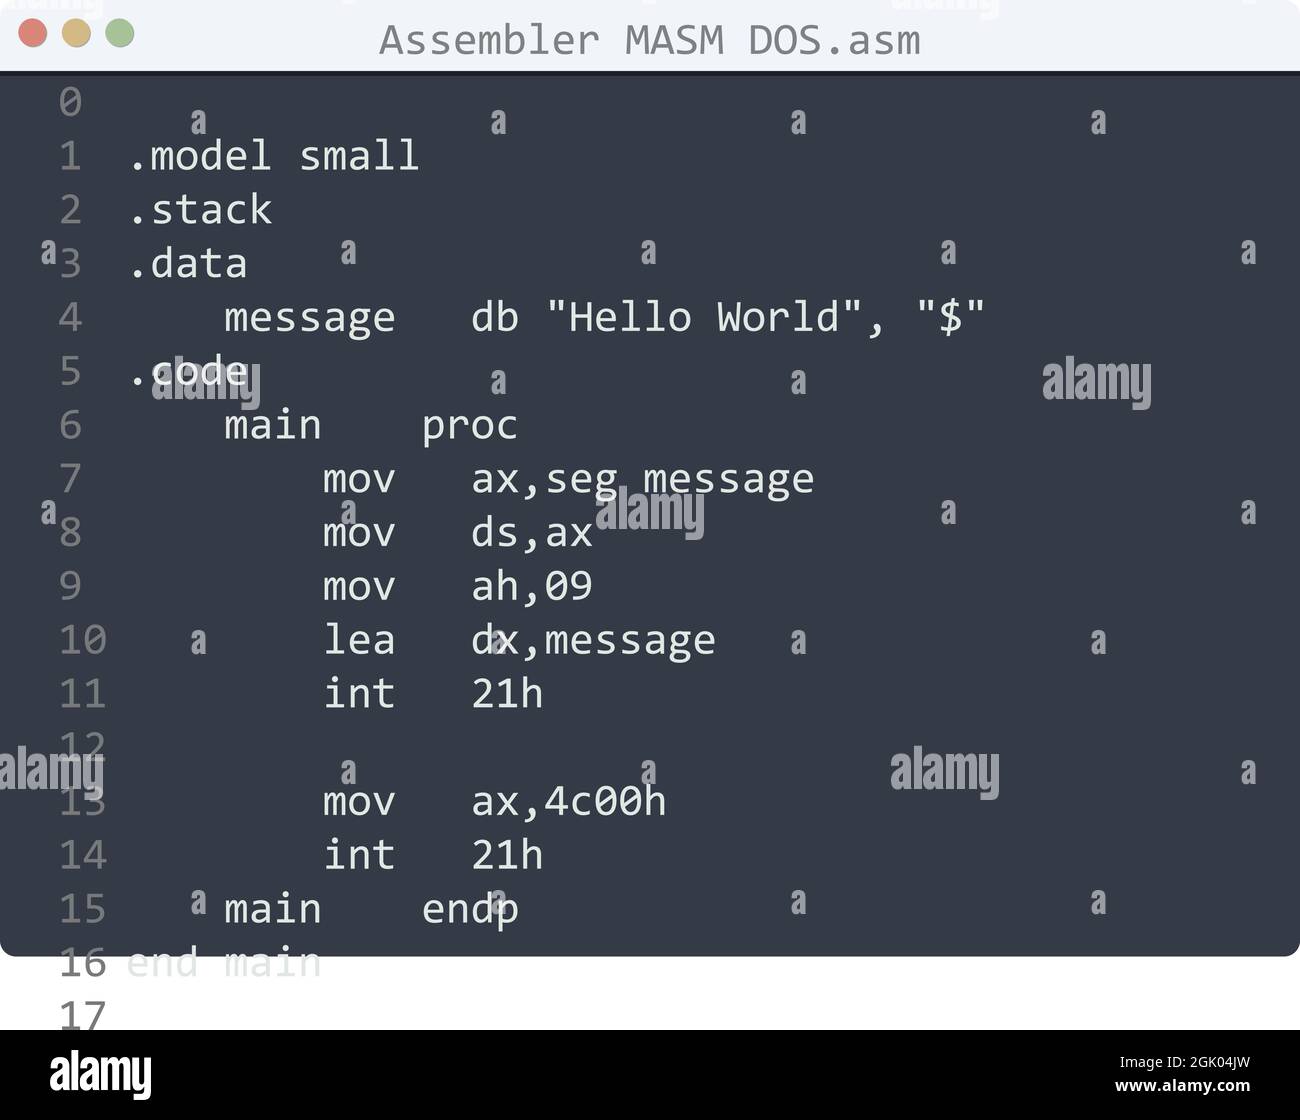 Assembler MASM DOS Sprache Hallo Welt Programm Beispiel in Editor-Fenster  Illustration Stock-Vektorgrafik - Alamy